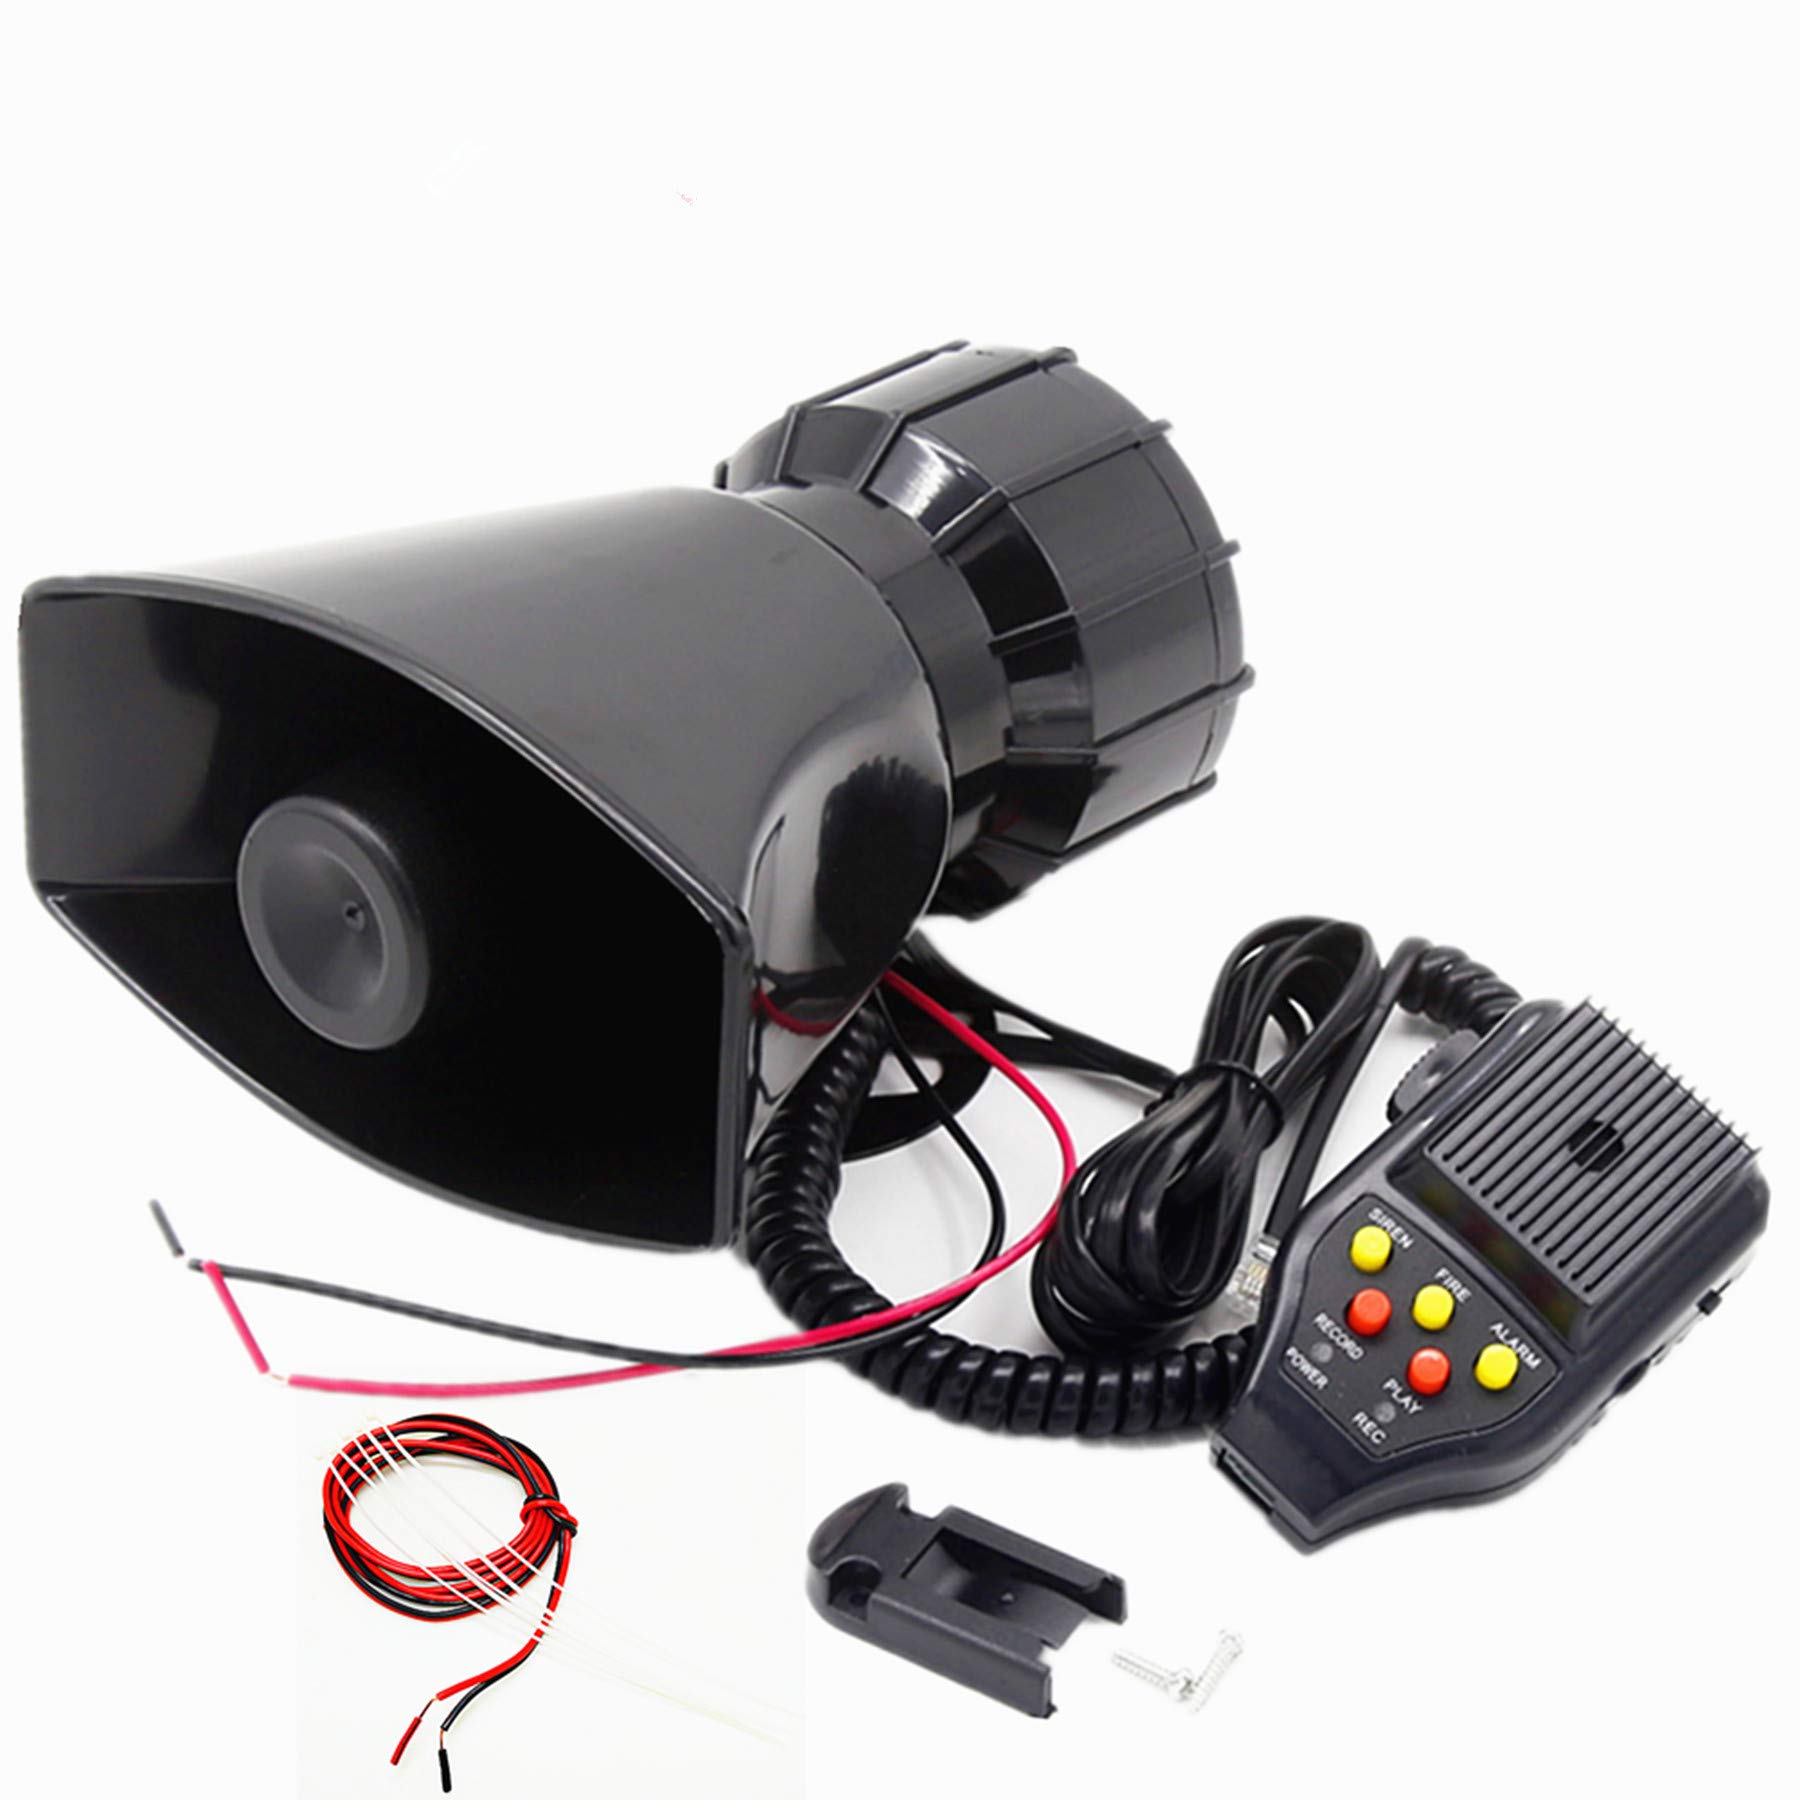 YIYIDA Auto-sirene lautsprecher autohupe 100 W 130DB auto sirene fahrzeug hupe mit mikrofon PA lautsprechersystem notverstärker alarmtrompete aufnahmefunktion für jedes 12V fahrzeug LKW boot car etc von YIYIDA